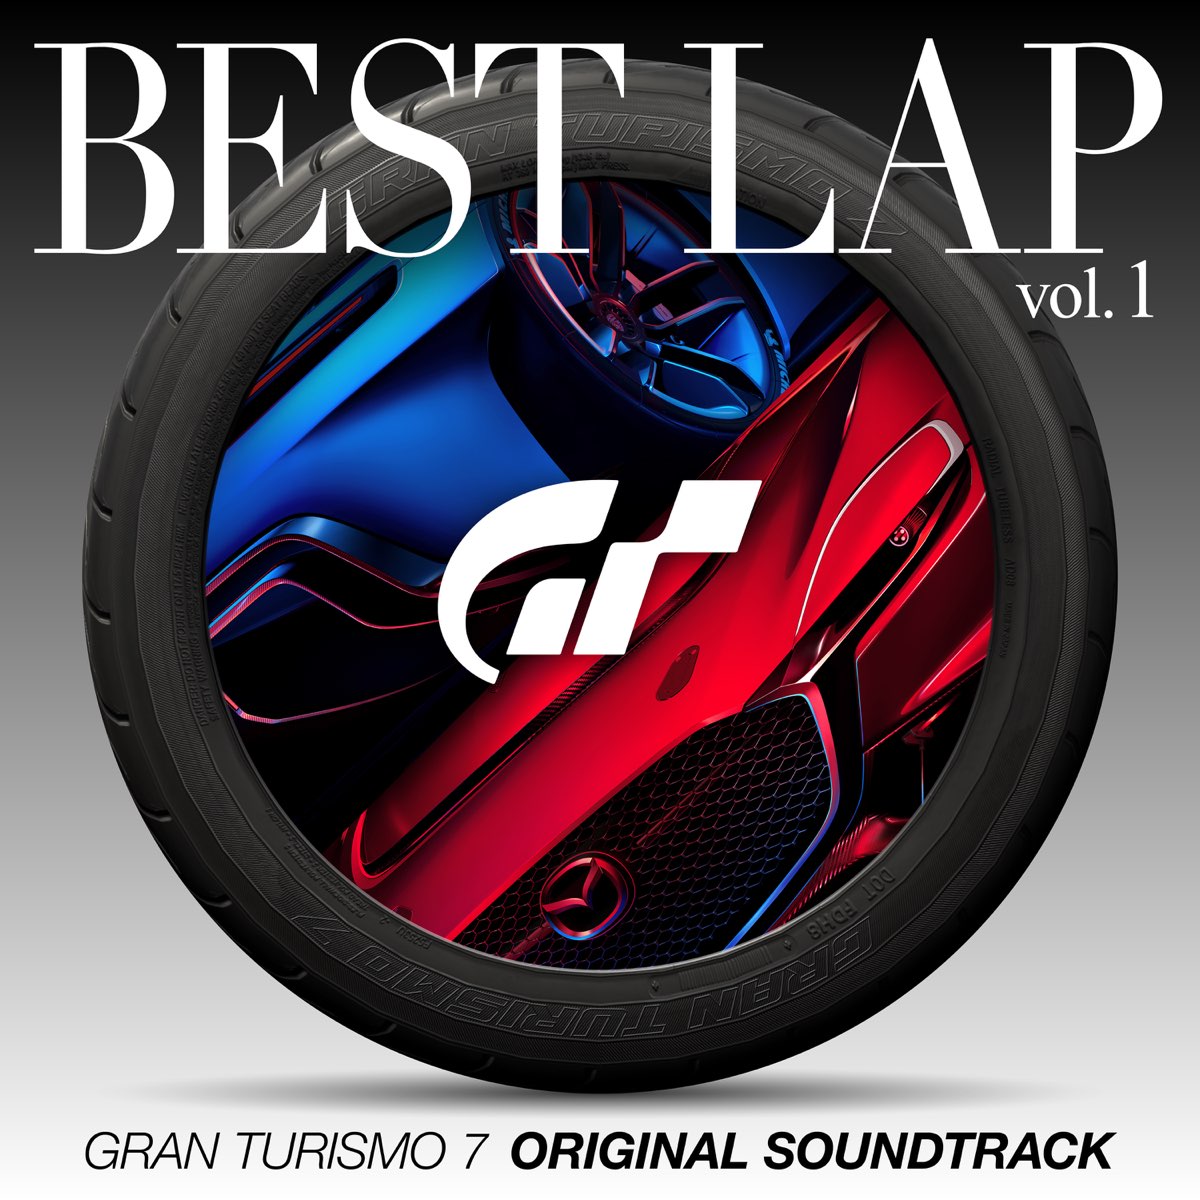 ‎Gran Turismo 7 (Original Soundtrack Best Lap Vol.1) Album by GRAN